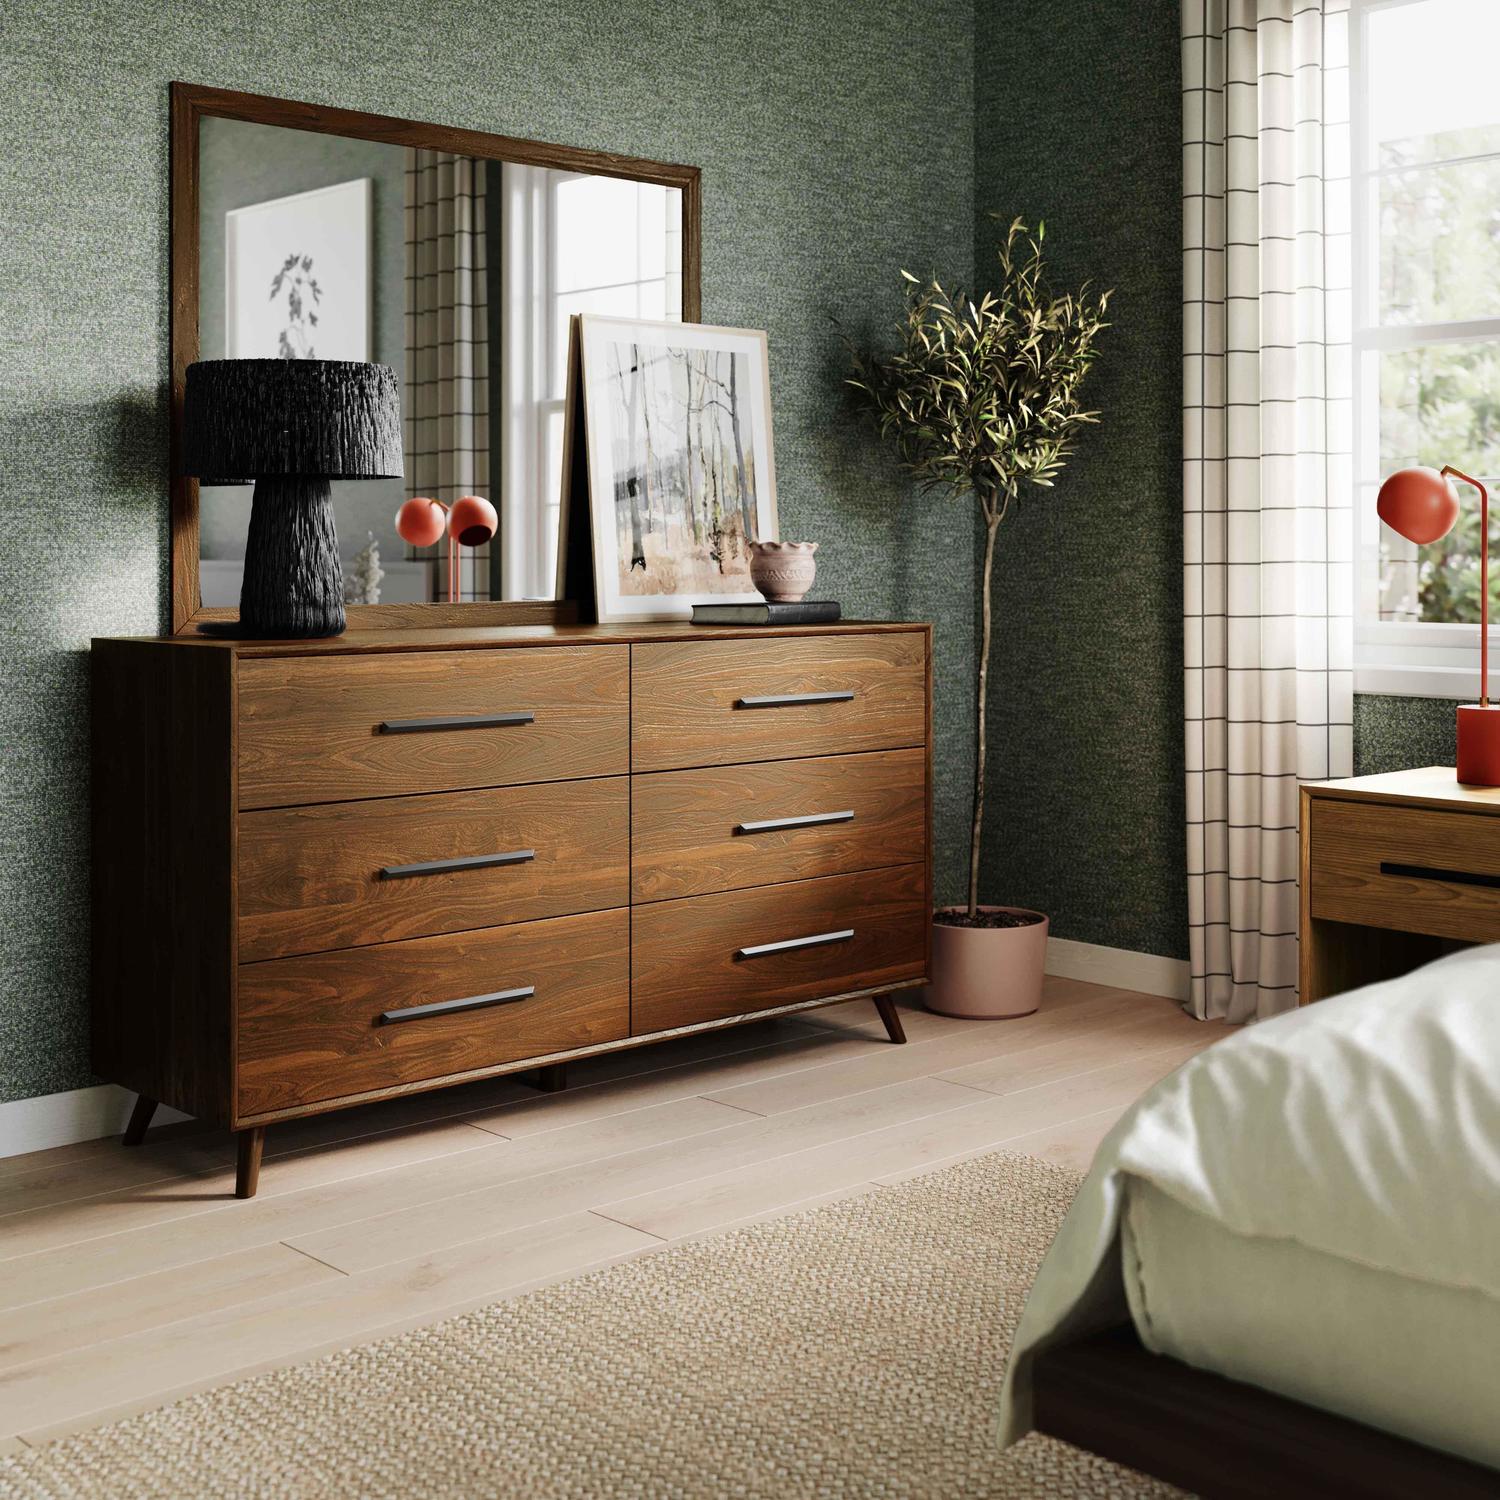 6 drawer cane dresser Tov Furniture Dressers Walnut